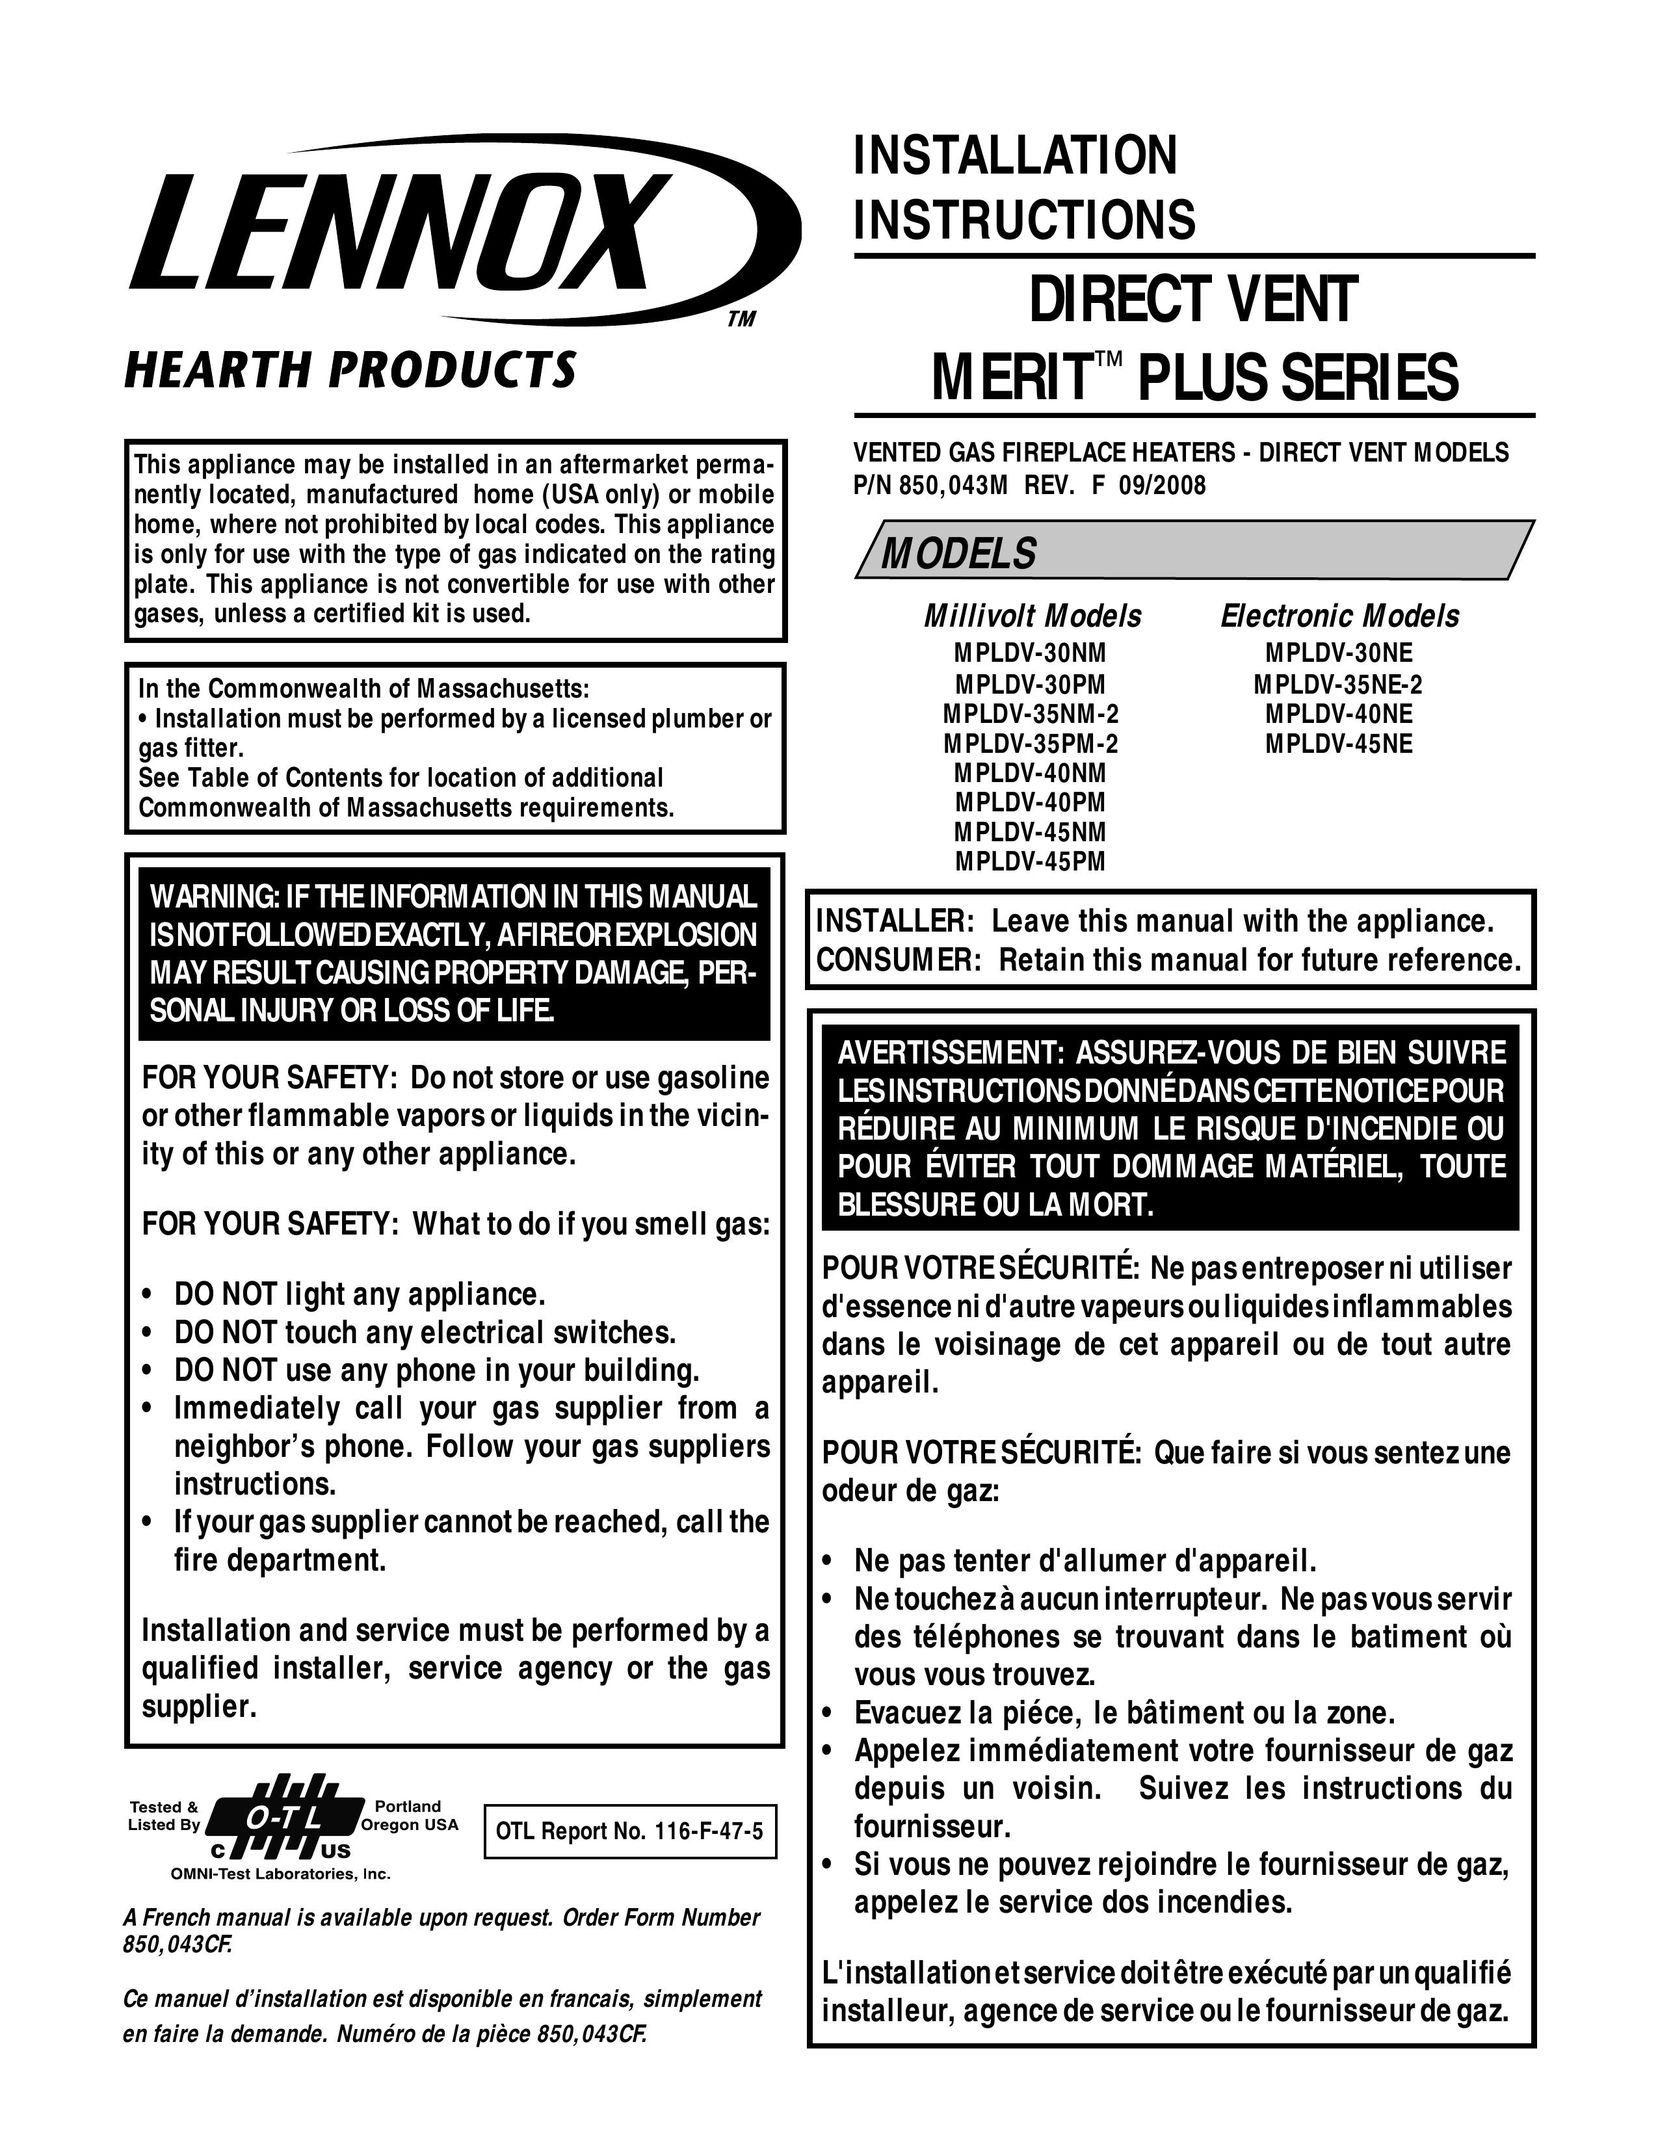 Lennox Hearth 2-MP53-VDLPM Indoor Fireplace User Manual